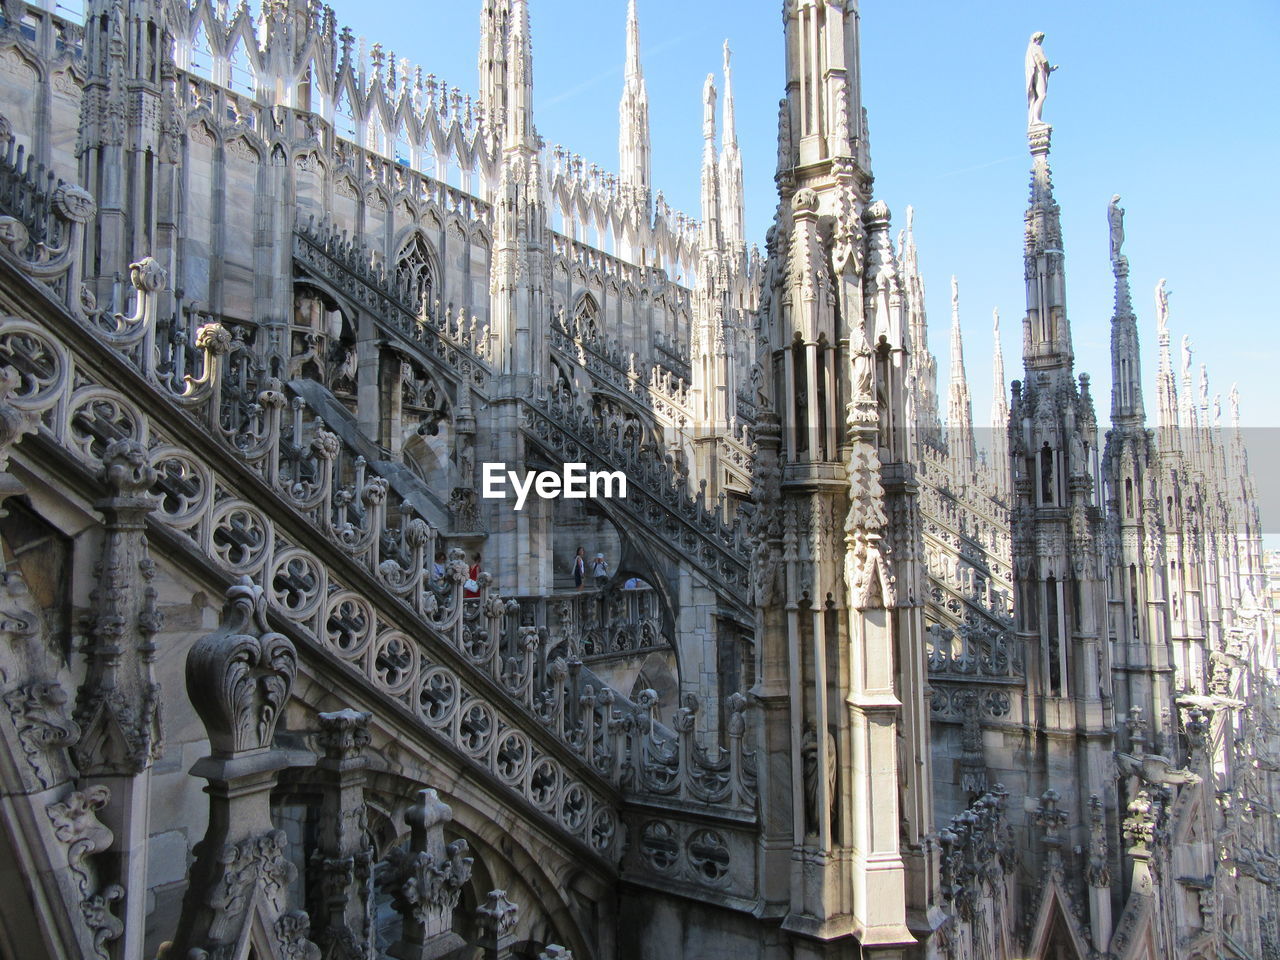 Duomo di milano against clear blue sky